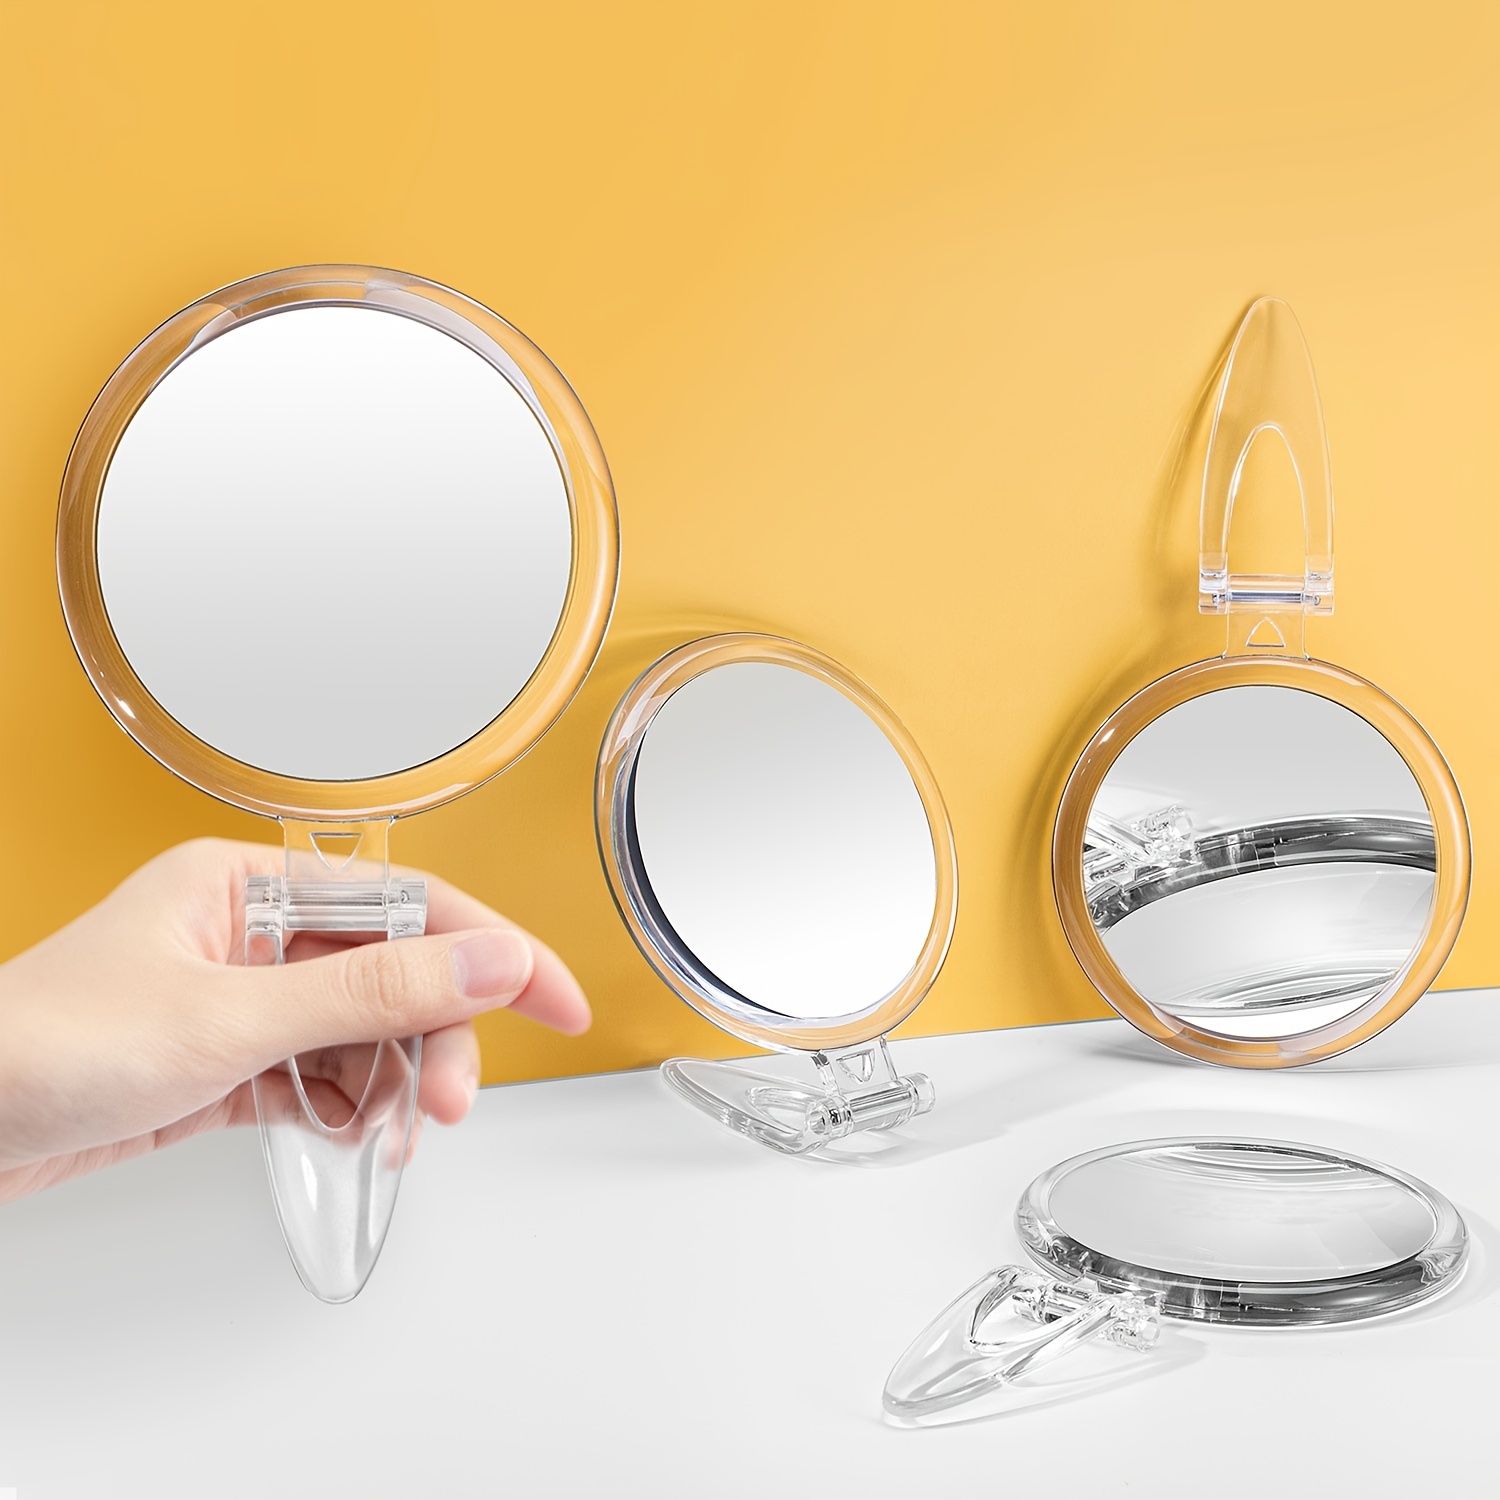  B Beauty Planet Espejo de aumento 20X, espejo de dos caras,  aumento 20X/1X, espejo de maquillaje plegable con soporte de mano/soporte,  uso para aplicación de maquillaje, pinzas y eliminación de puntos 